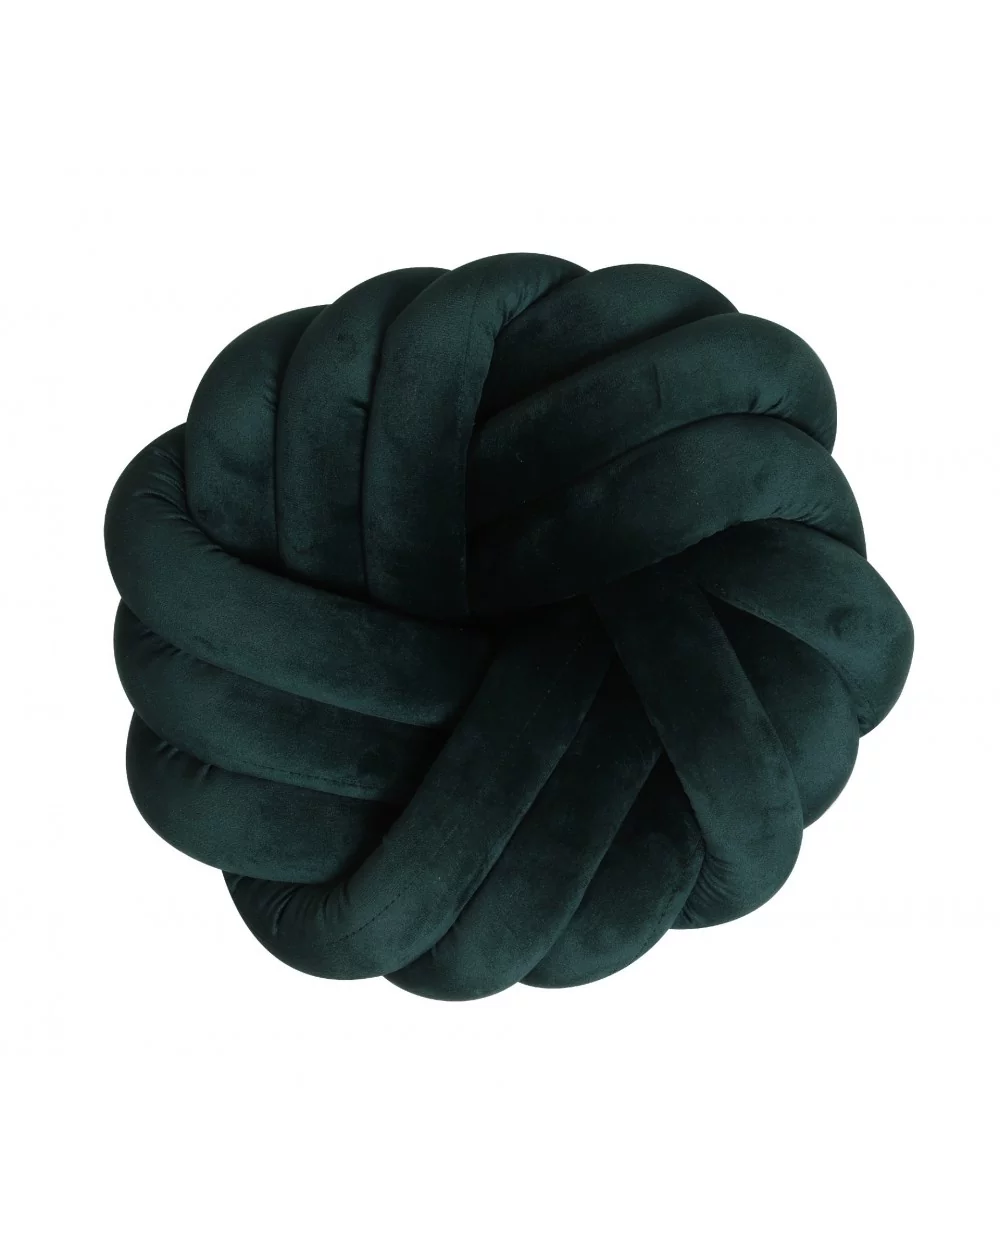 Dekoračný vankúš KNOT velvet, dark green, 33 cm